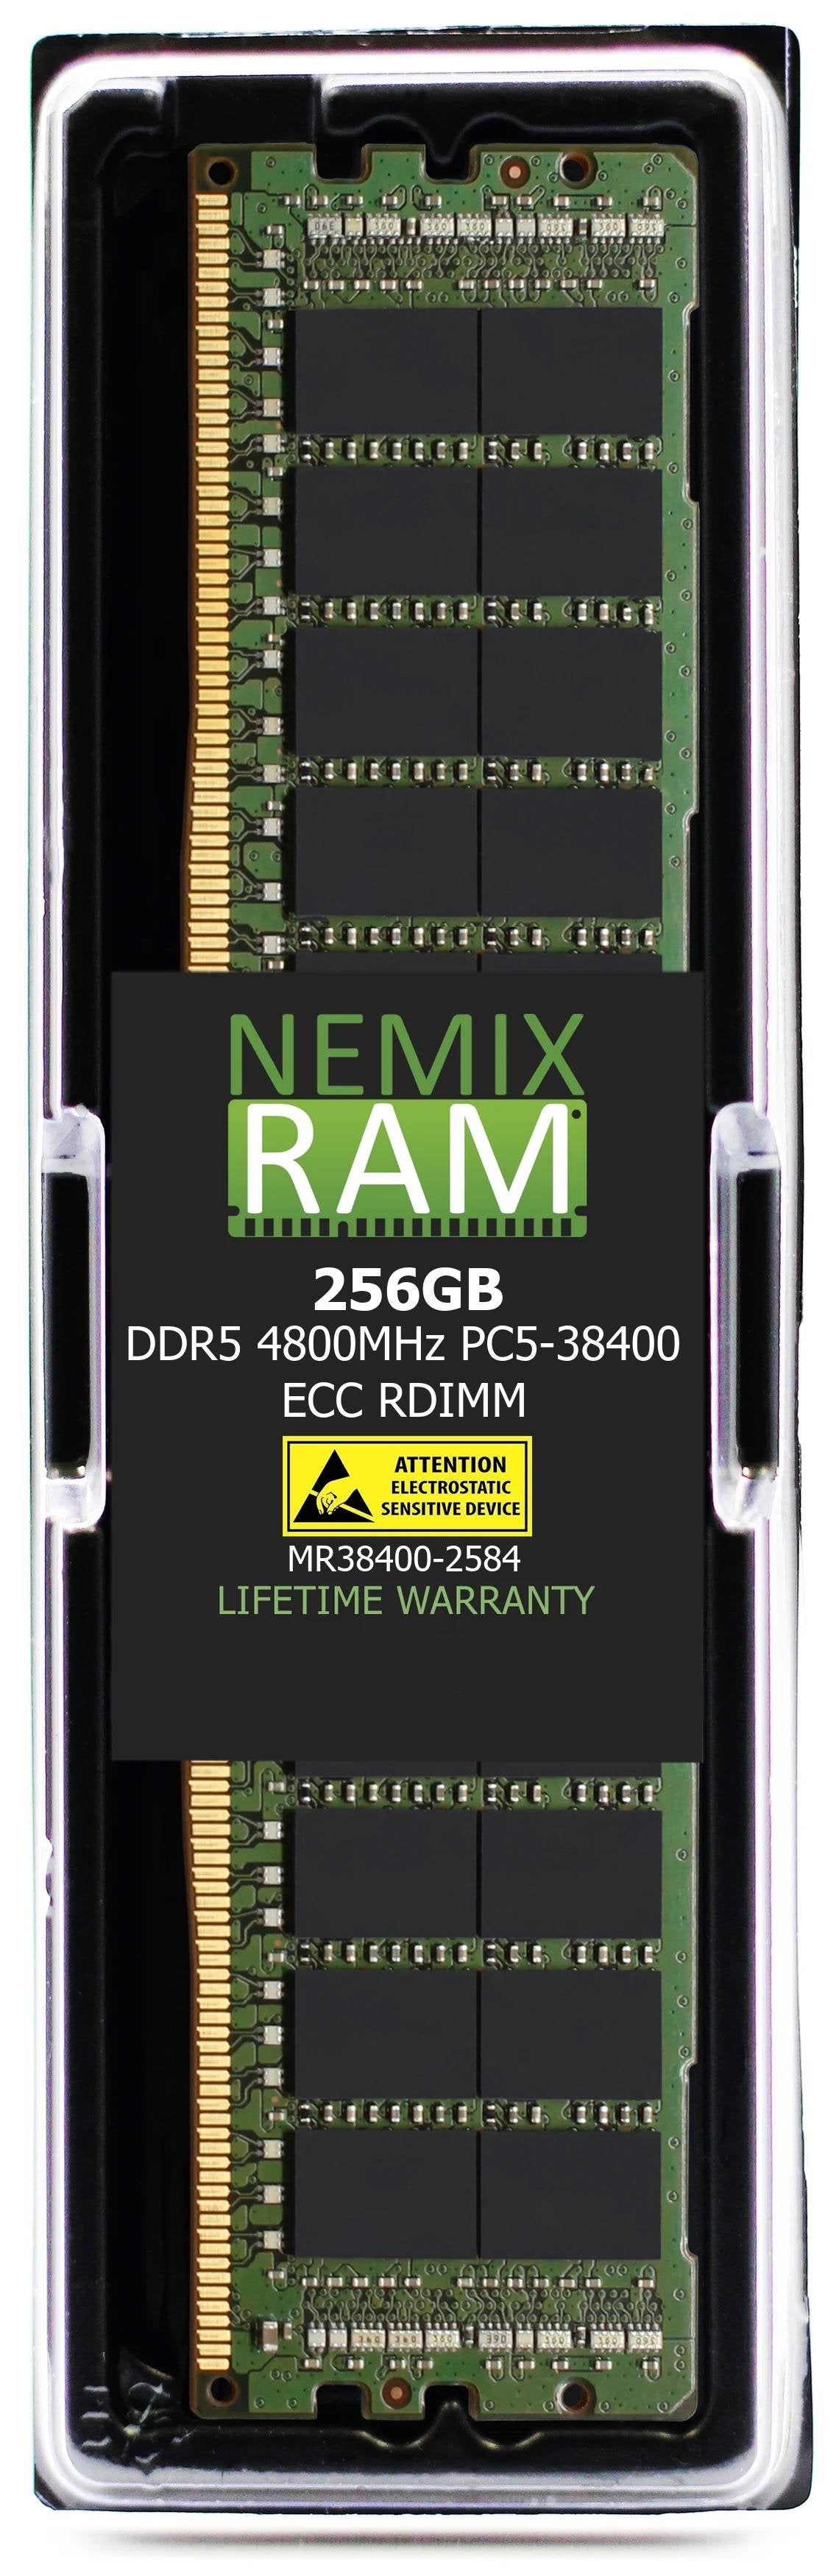 NEMIX RAM 256GB DDR5 4800MHz PC5-38400 ECC RDIMM Compatible with Samsung M321RBGA0B40-CWK